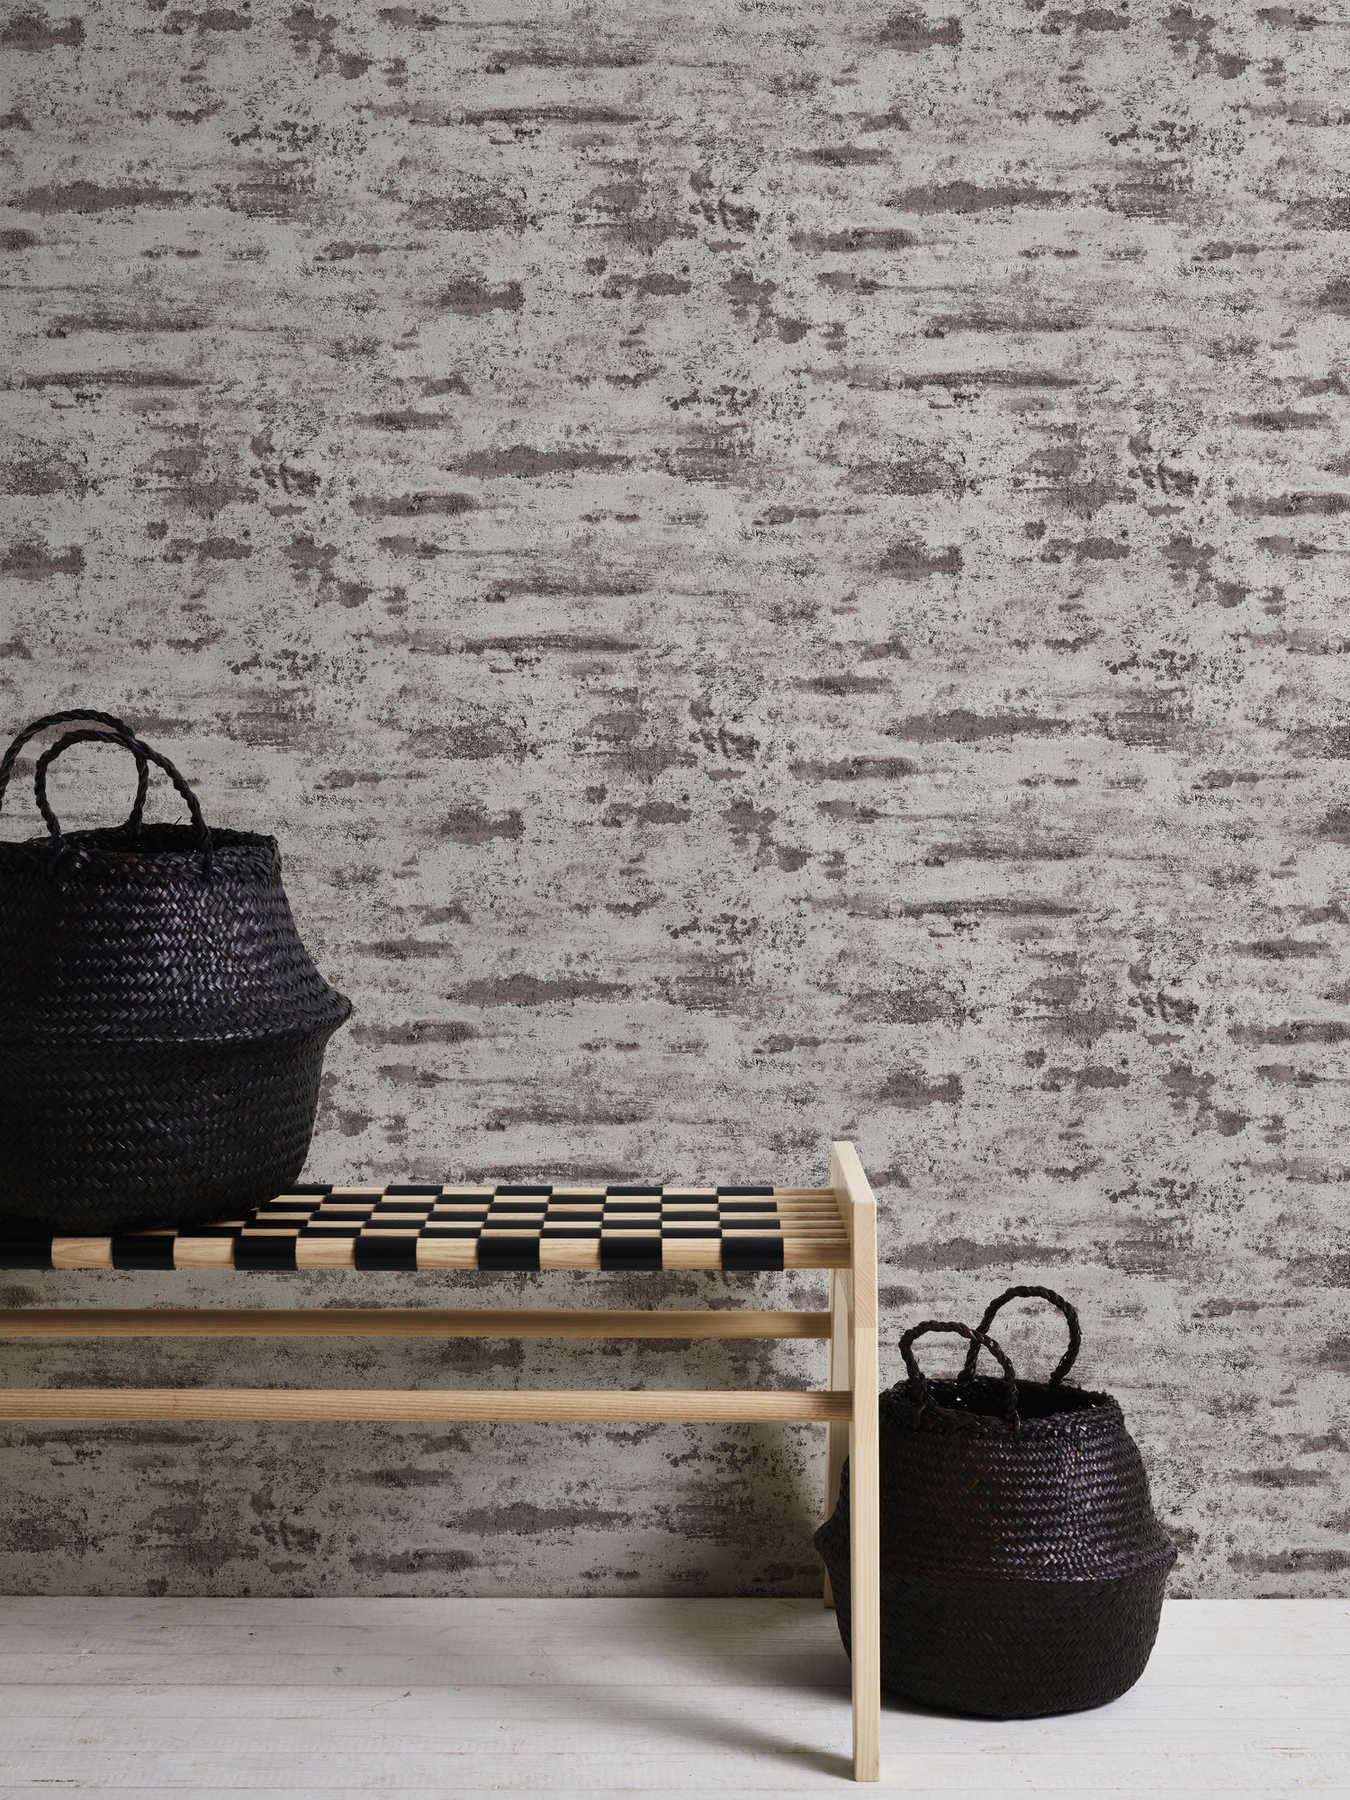             Non-woven wallpaper rustic pattern, plaster look - grey, black
        